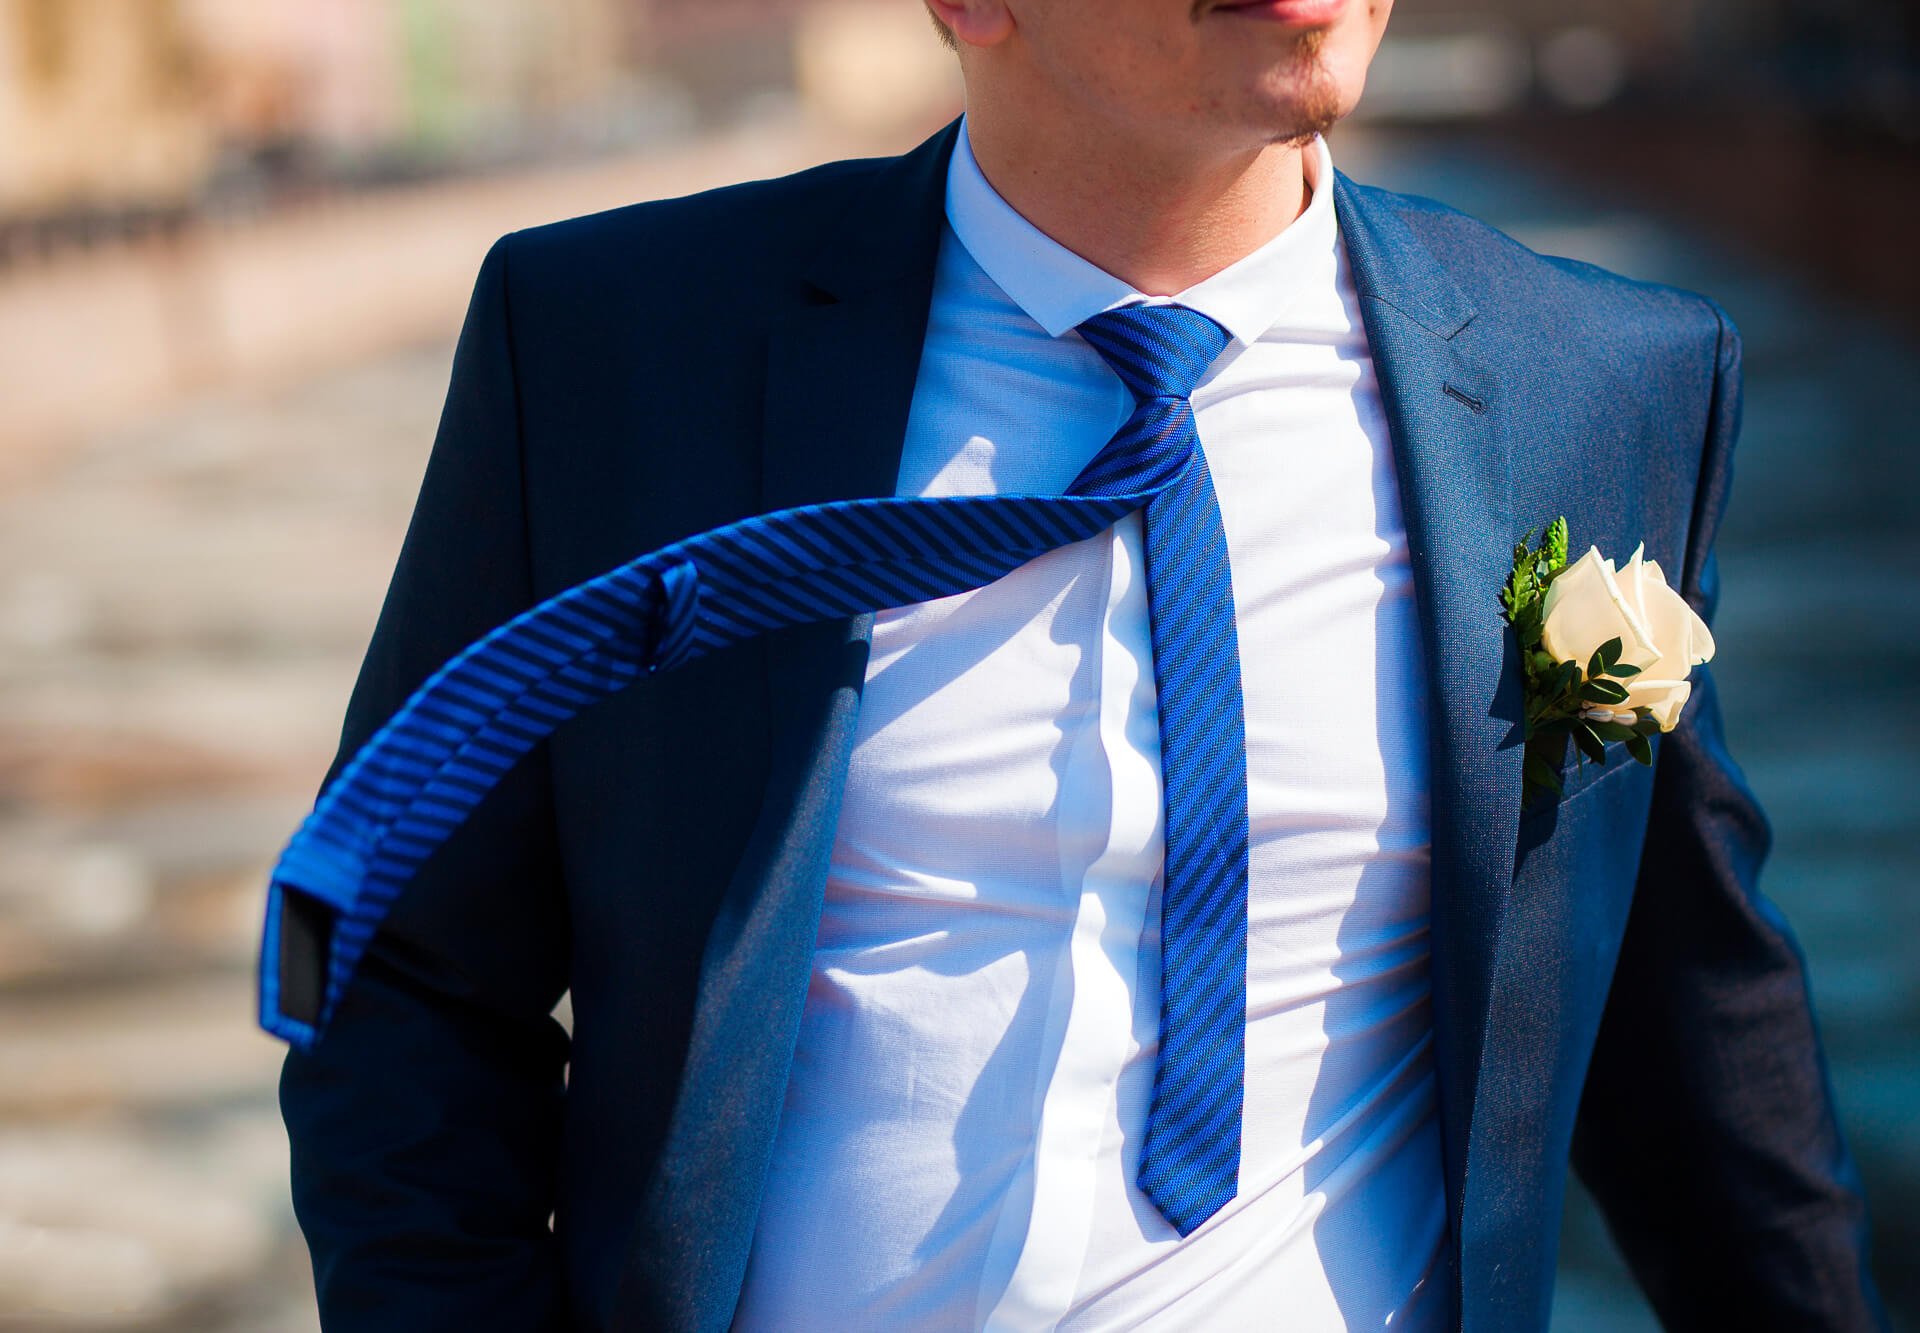 Синий костюм белая рубашка и синий галстук